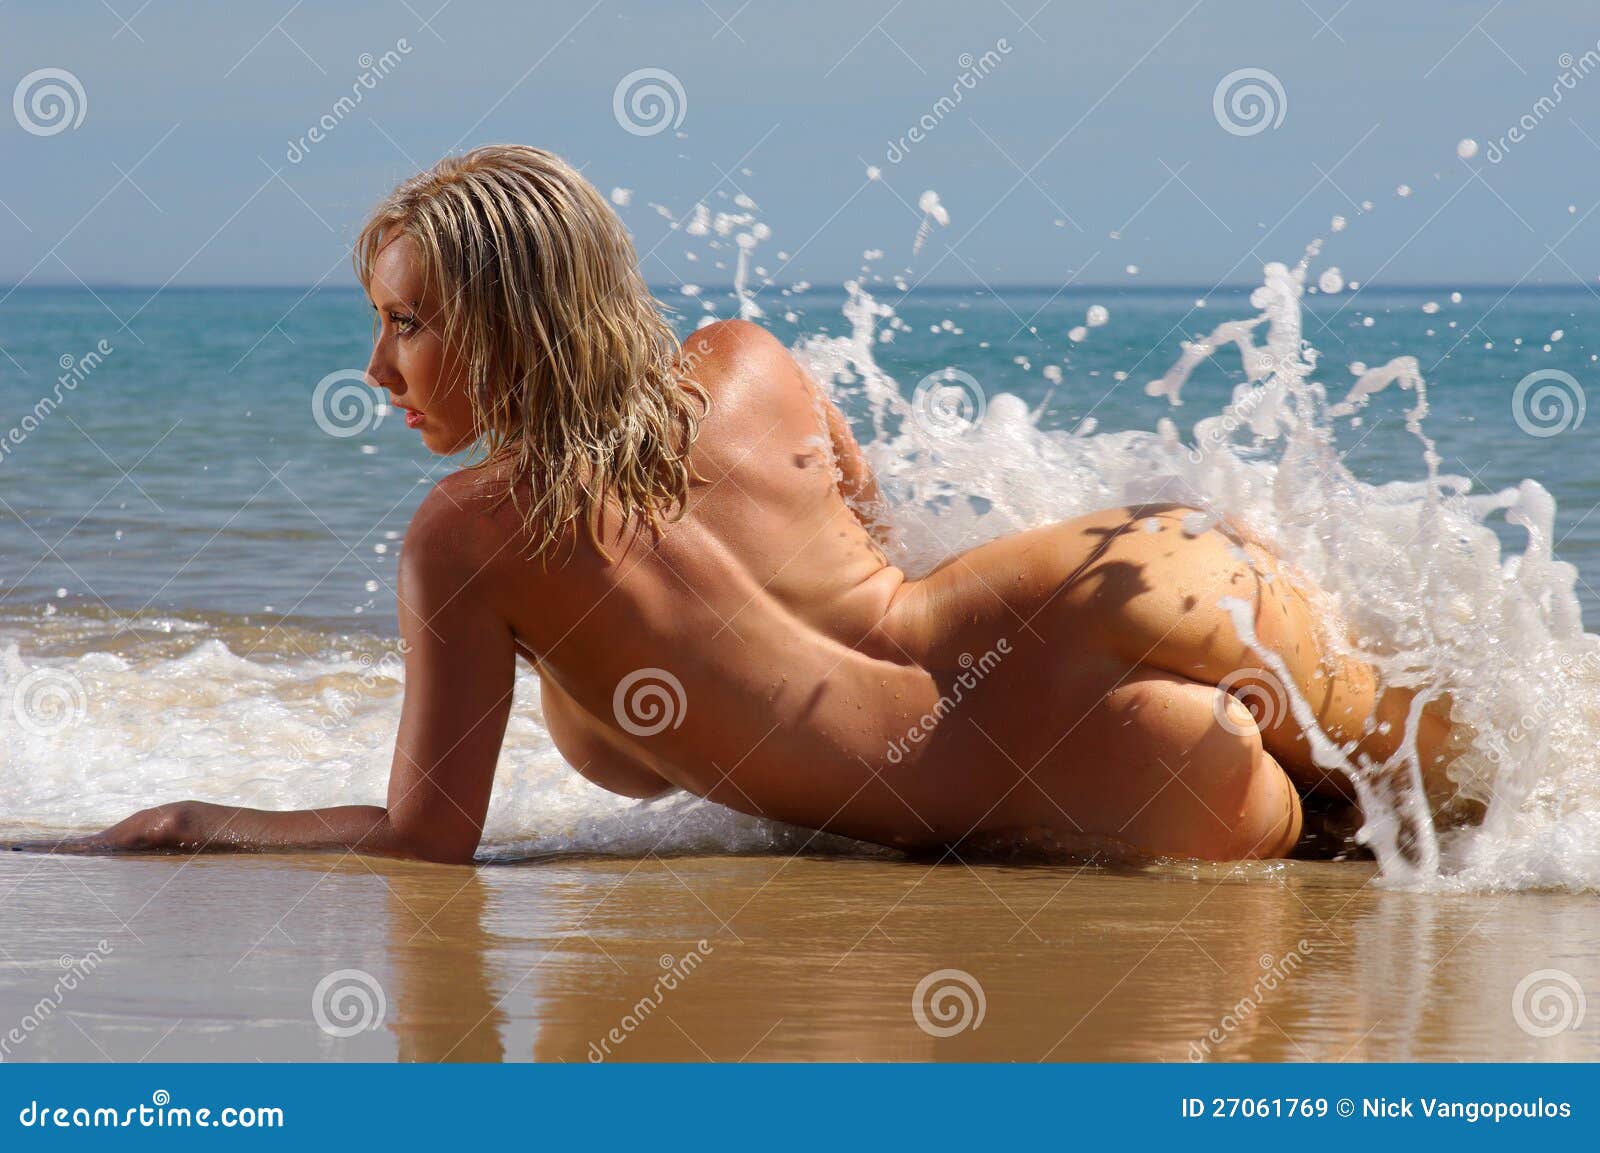 Greek island nude beach girls